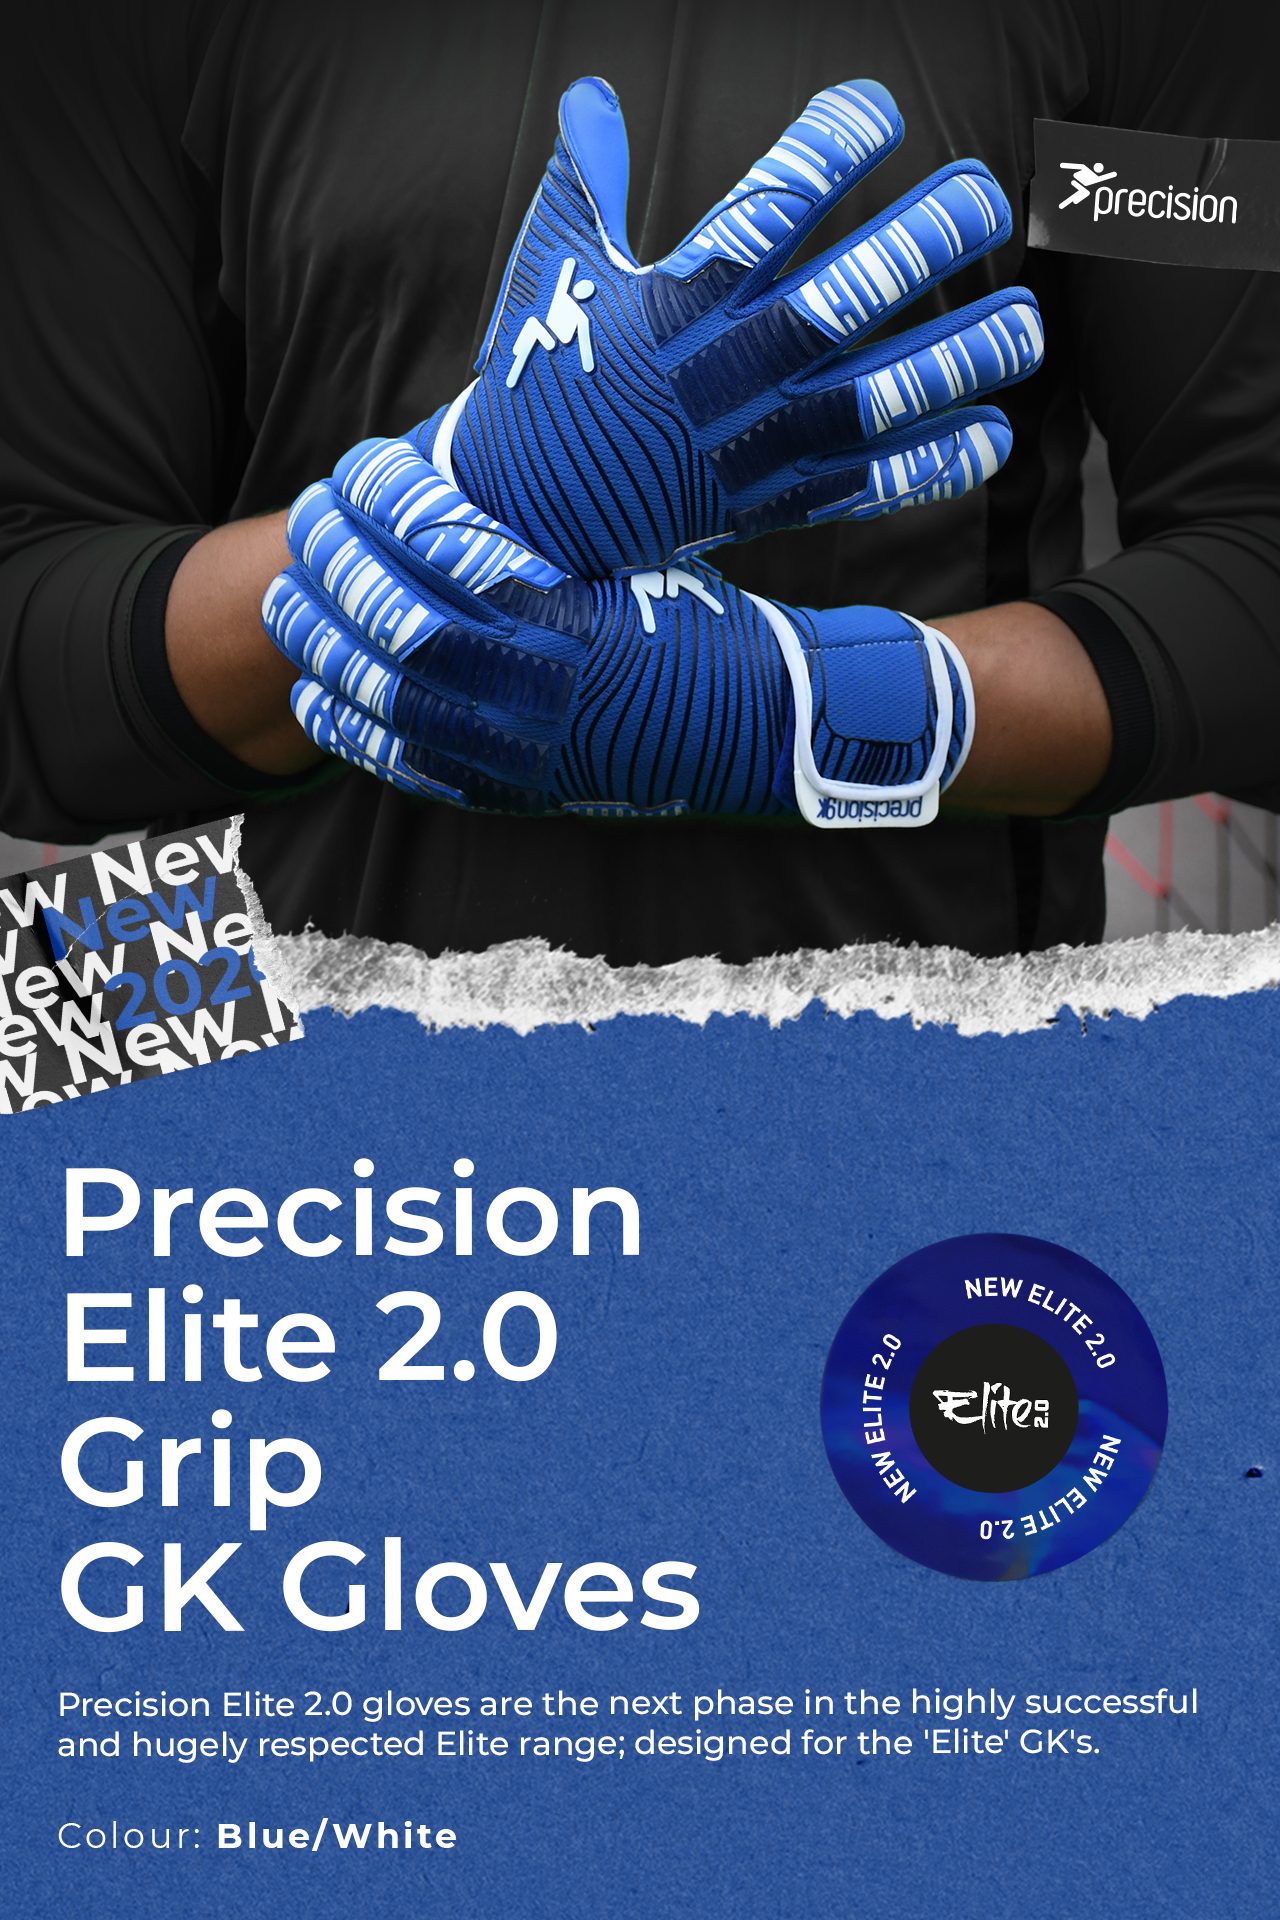 Precision Junior Elite 2.0 Grip GK Gloves